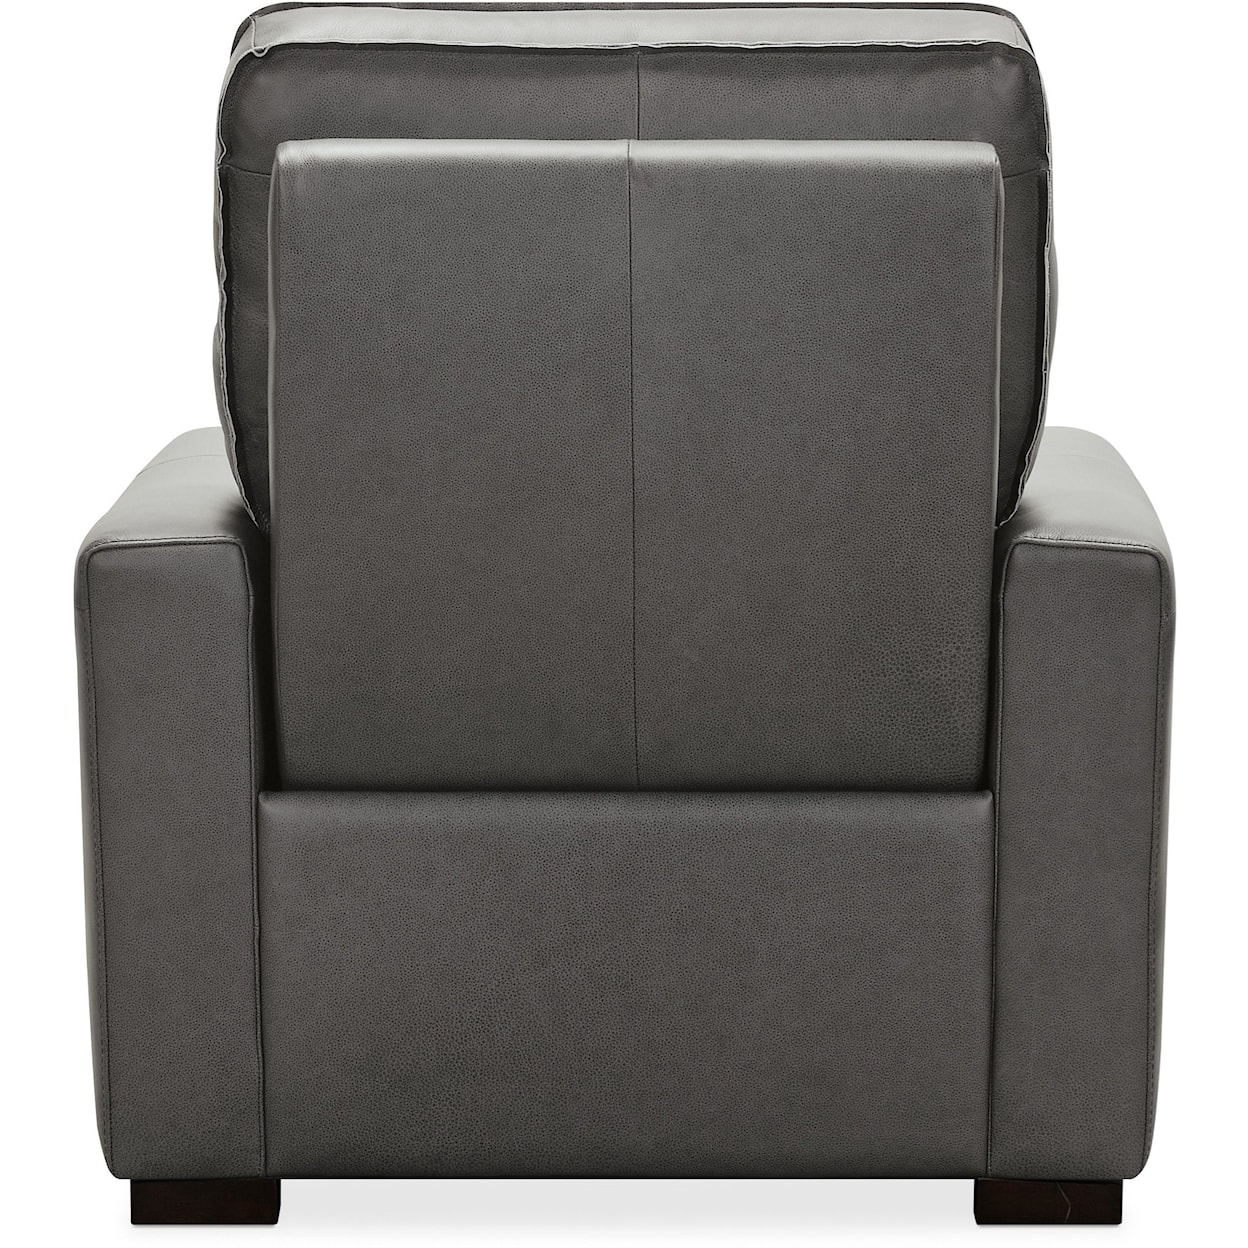 Hooker Furniture Braeburn Leather Recliner w/ Power Headrest